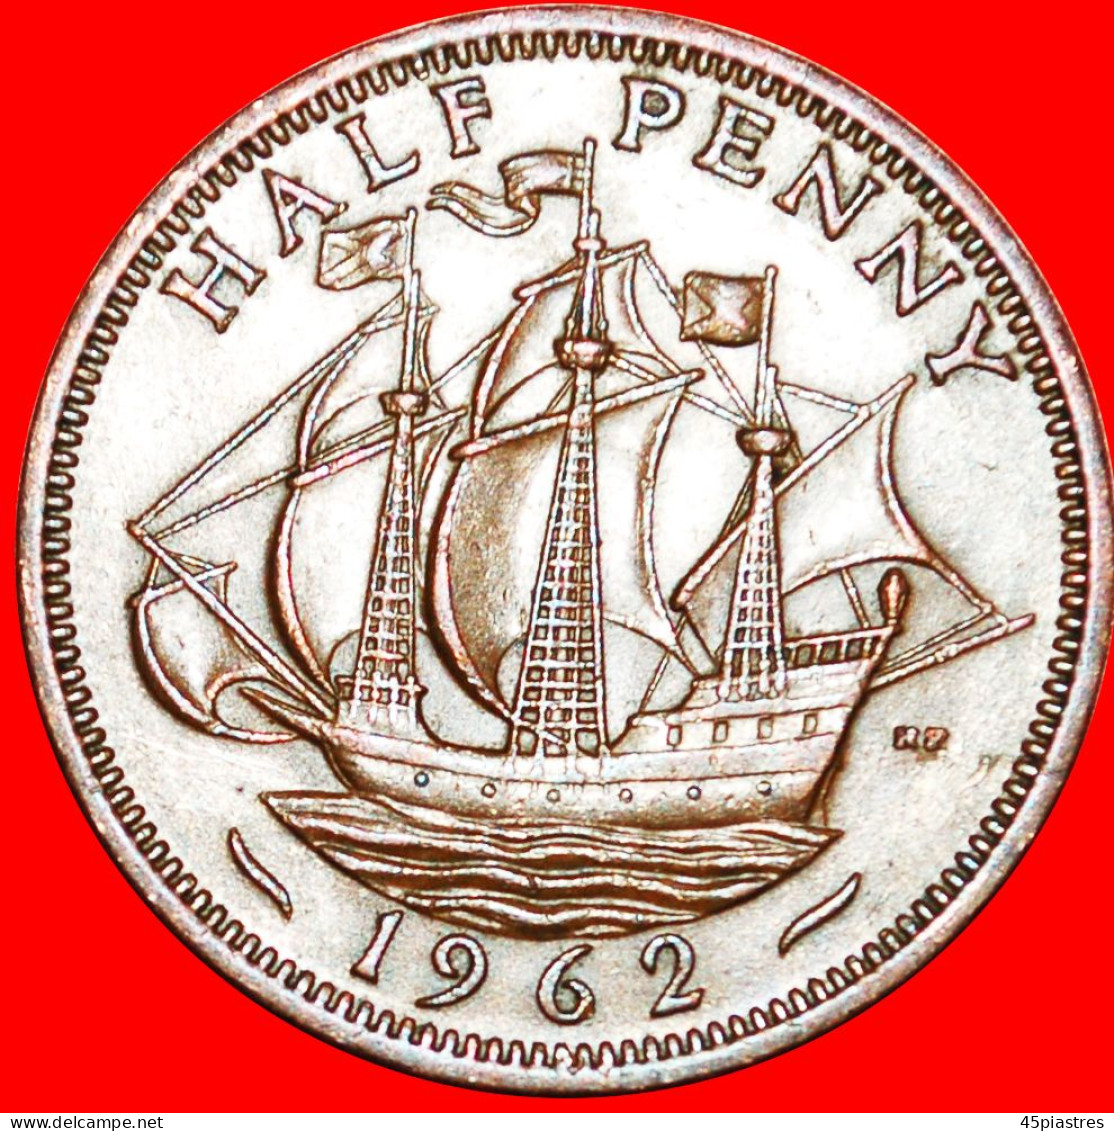 &#9733;SHIP Golden Hind: UNITED KINGDOM&#9733; HALF PENNY 1962!  LOW START &#9733;NO RESERVE! - C. 1/2 Penny